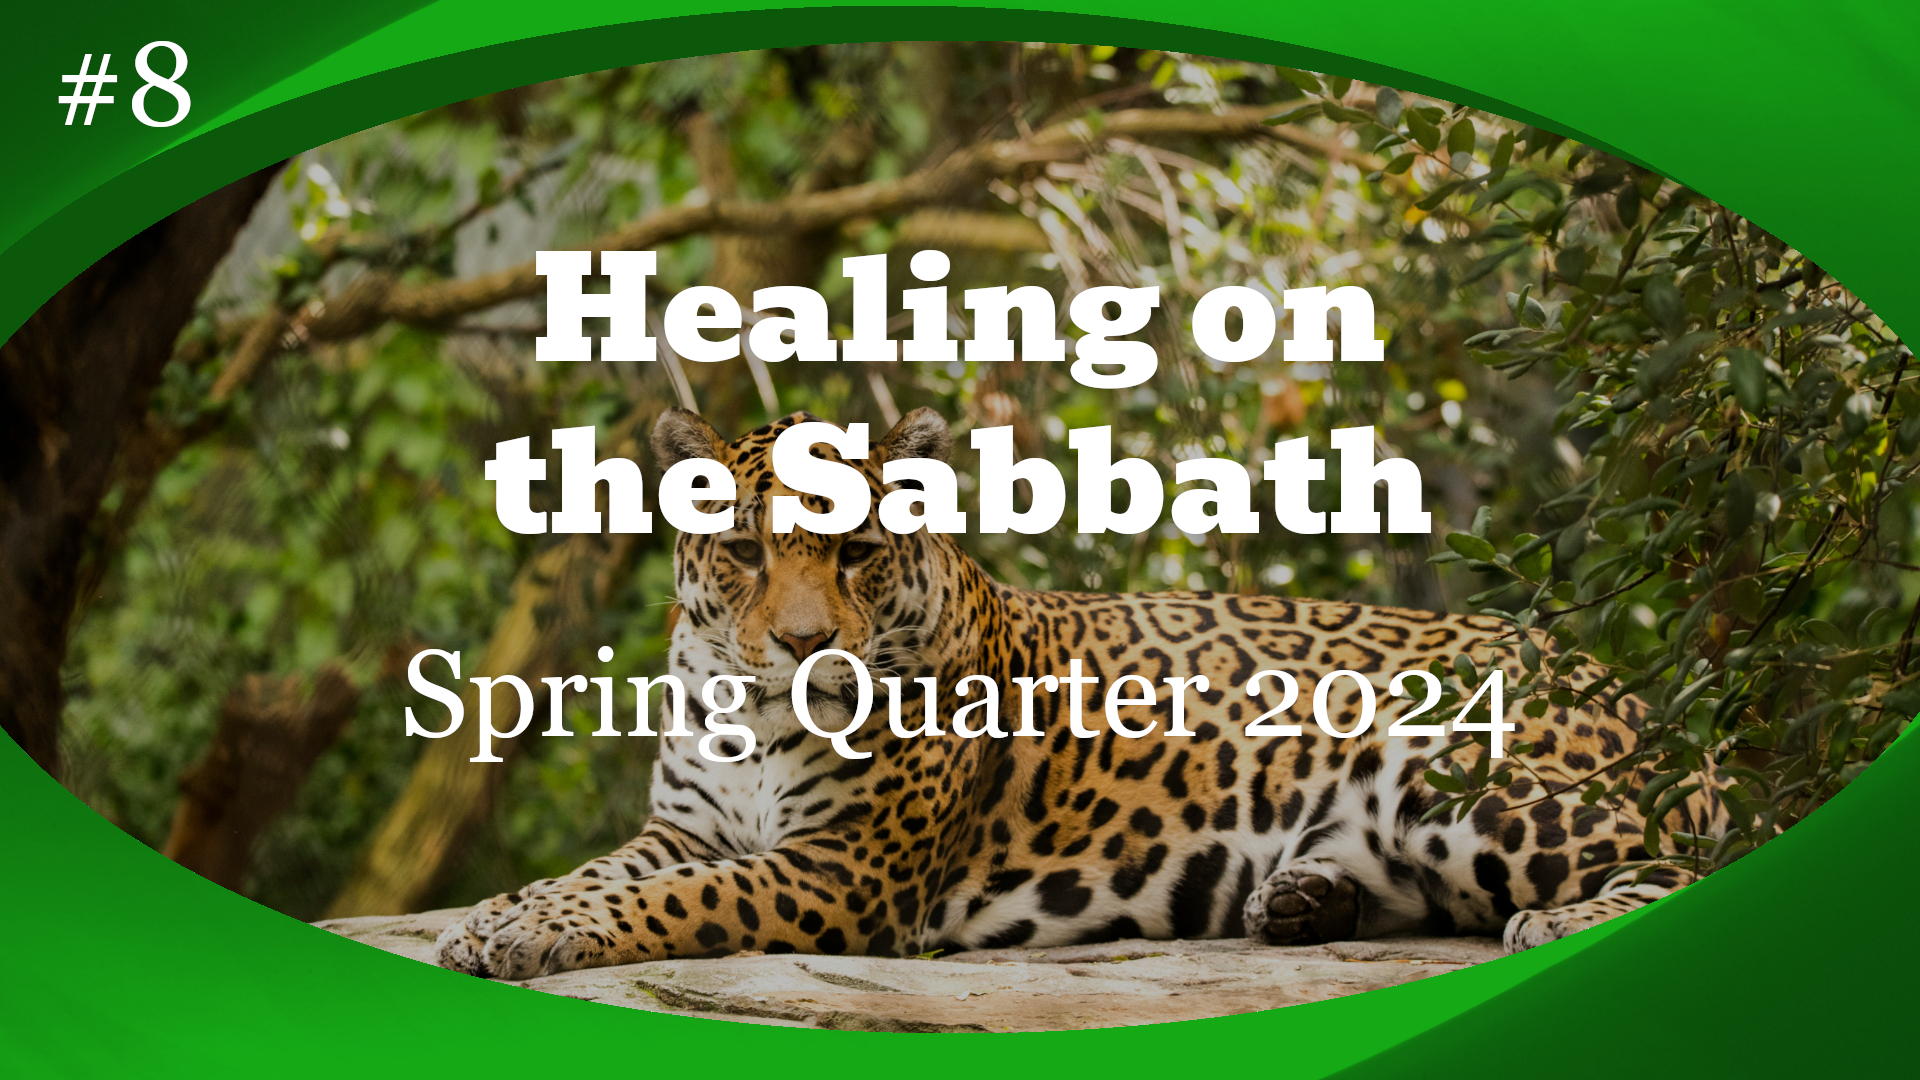 Healing on the Sabbath banner